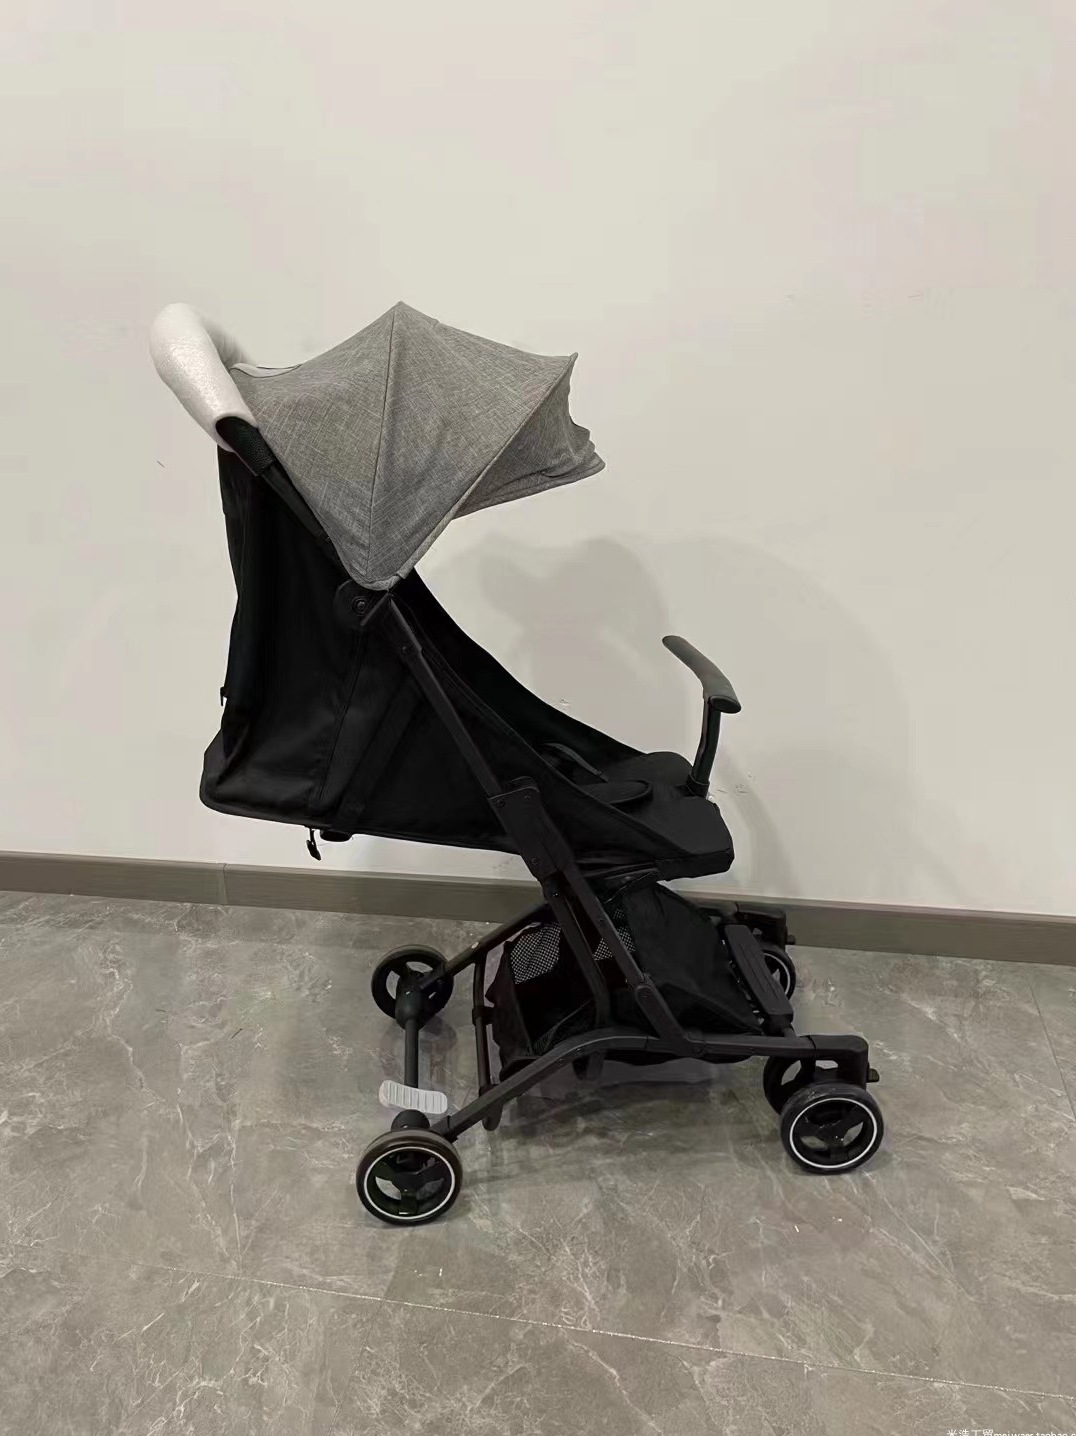 mstar portable stroller four-wheel umbrella car shock absorber simple ultra-small foldable pocket stroller new